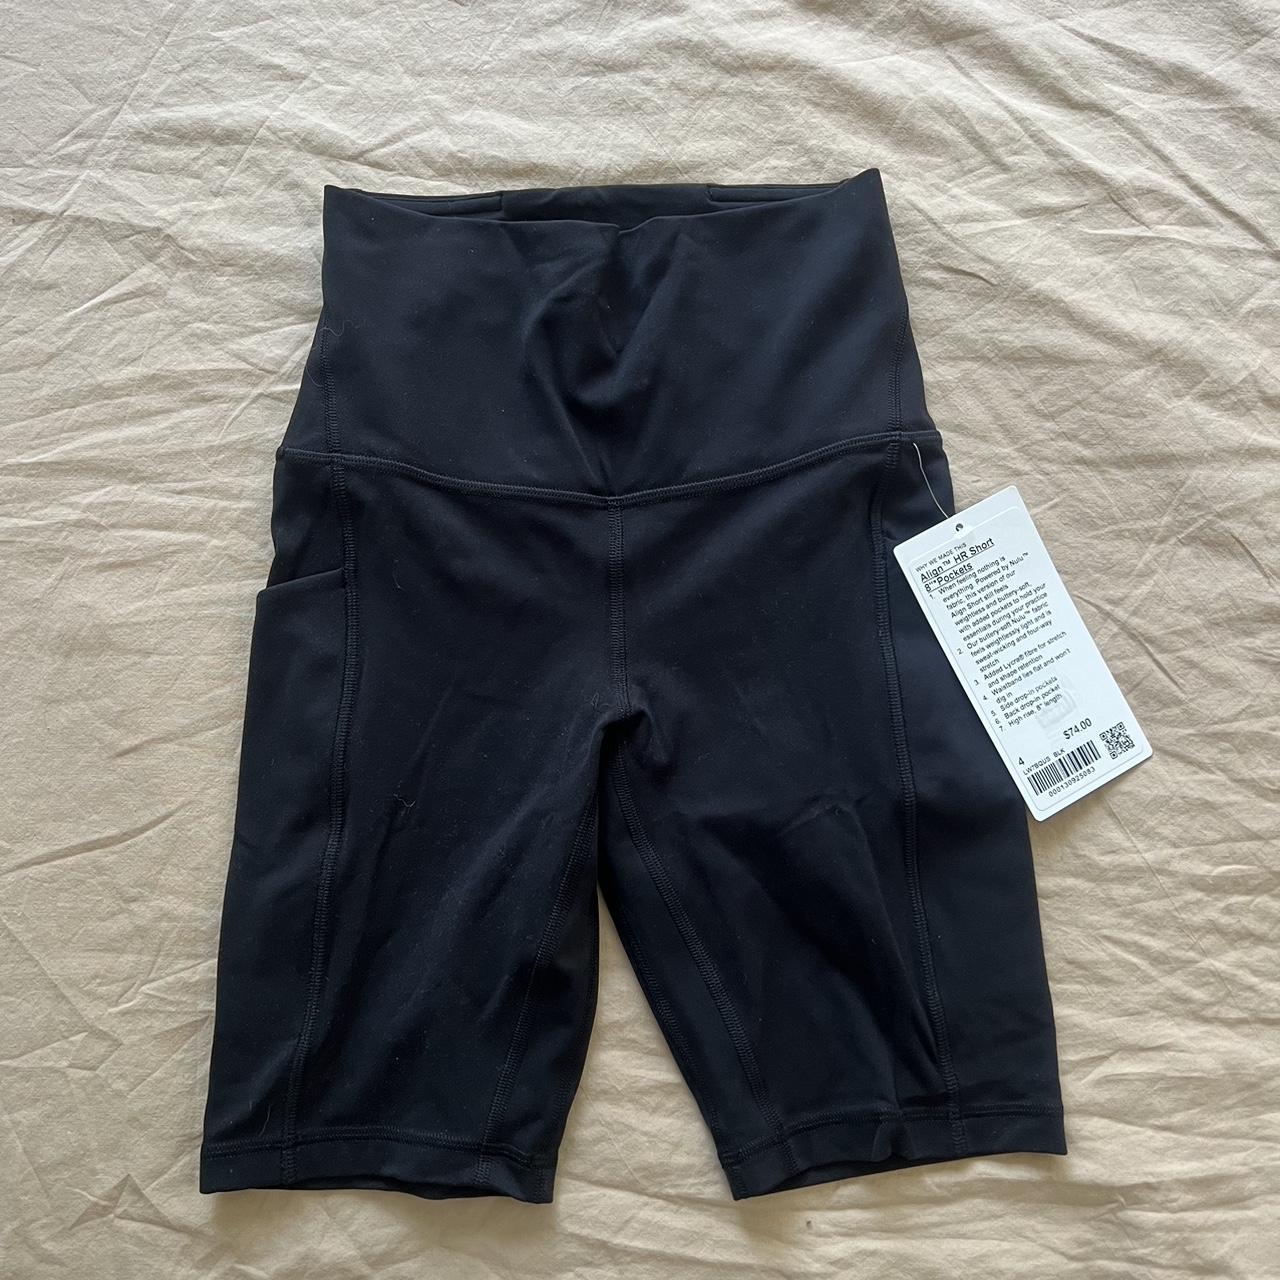 Lululemon Align Shorts 6 Inch 2 pairs for $85 - Depop